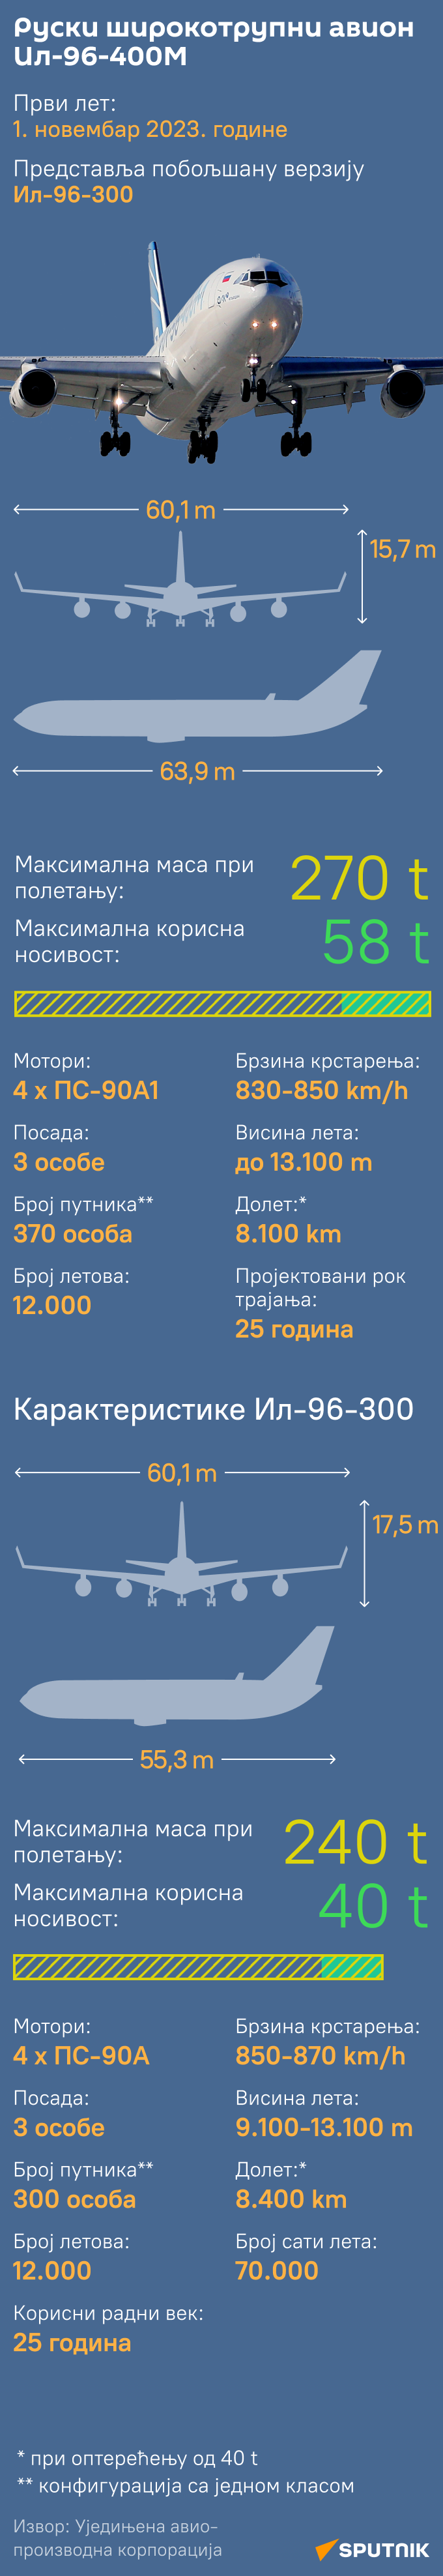 ИНФОГРАФИКА авион Ил-96 ЋИР моб - Sputnik Србија